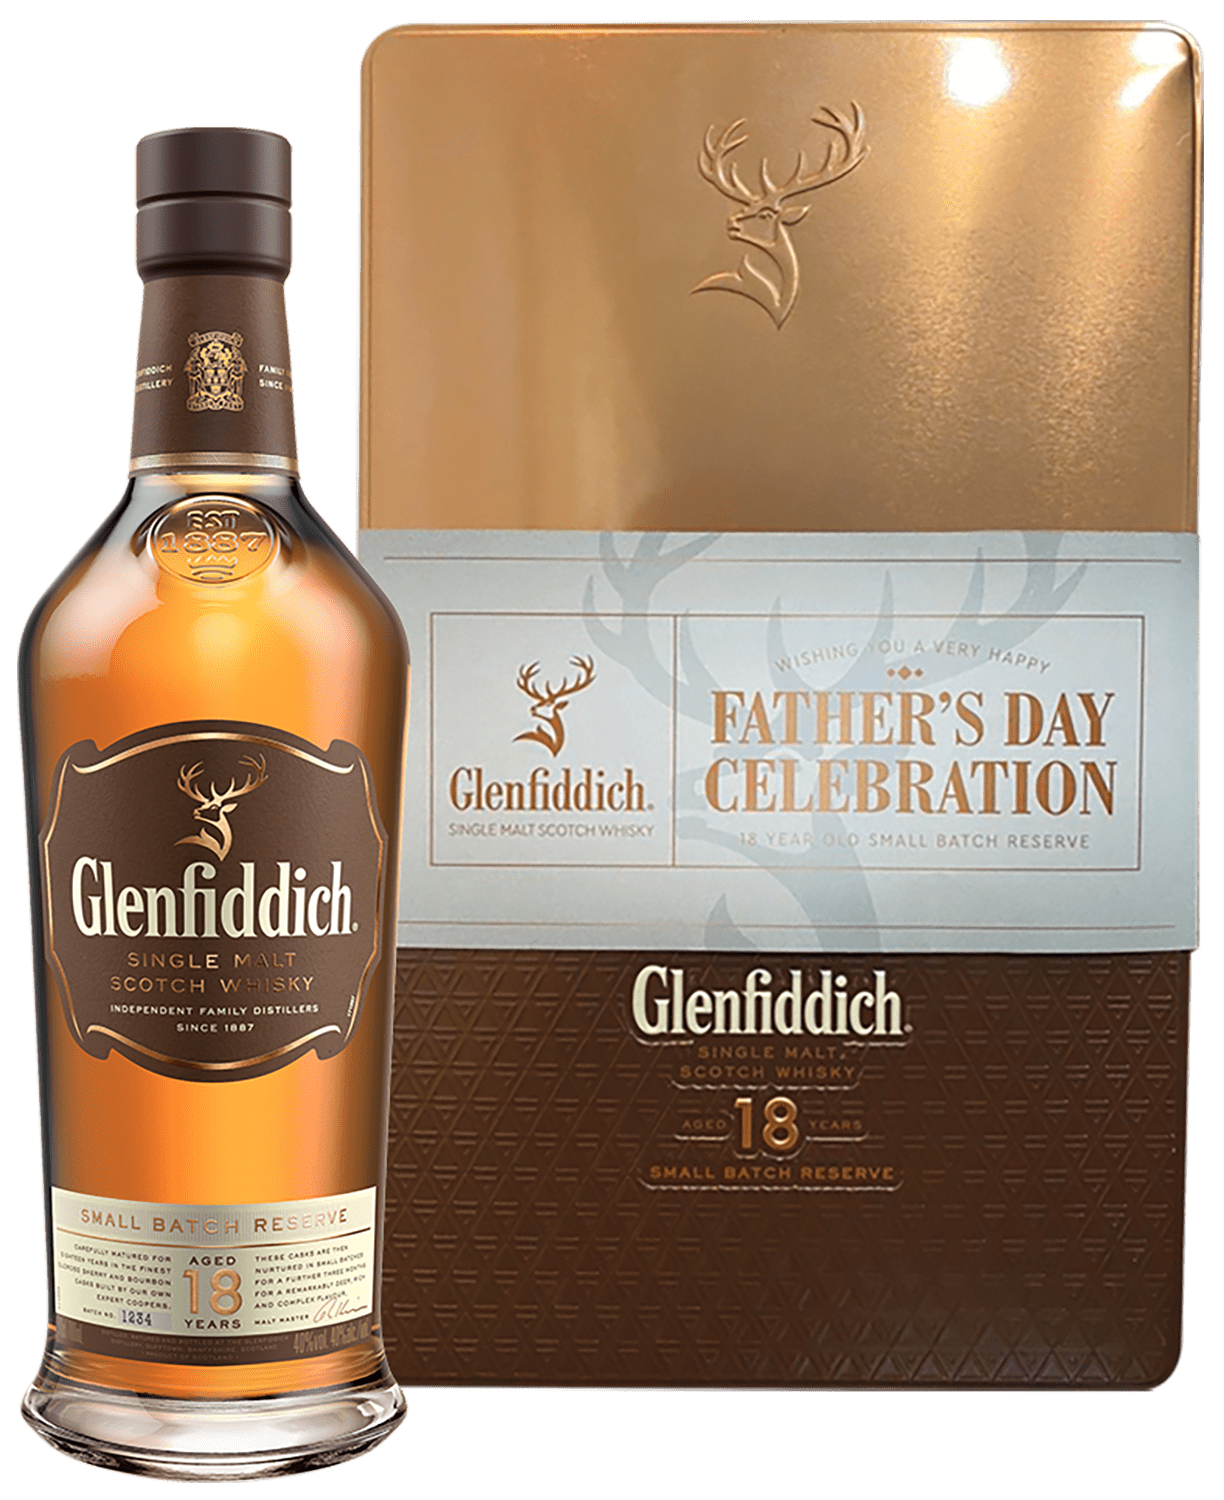 Glenfiddich 18 y.o. Single Malt Scotch Whisky (gift box with two glasses)